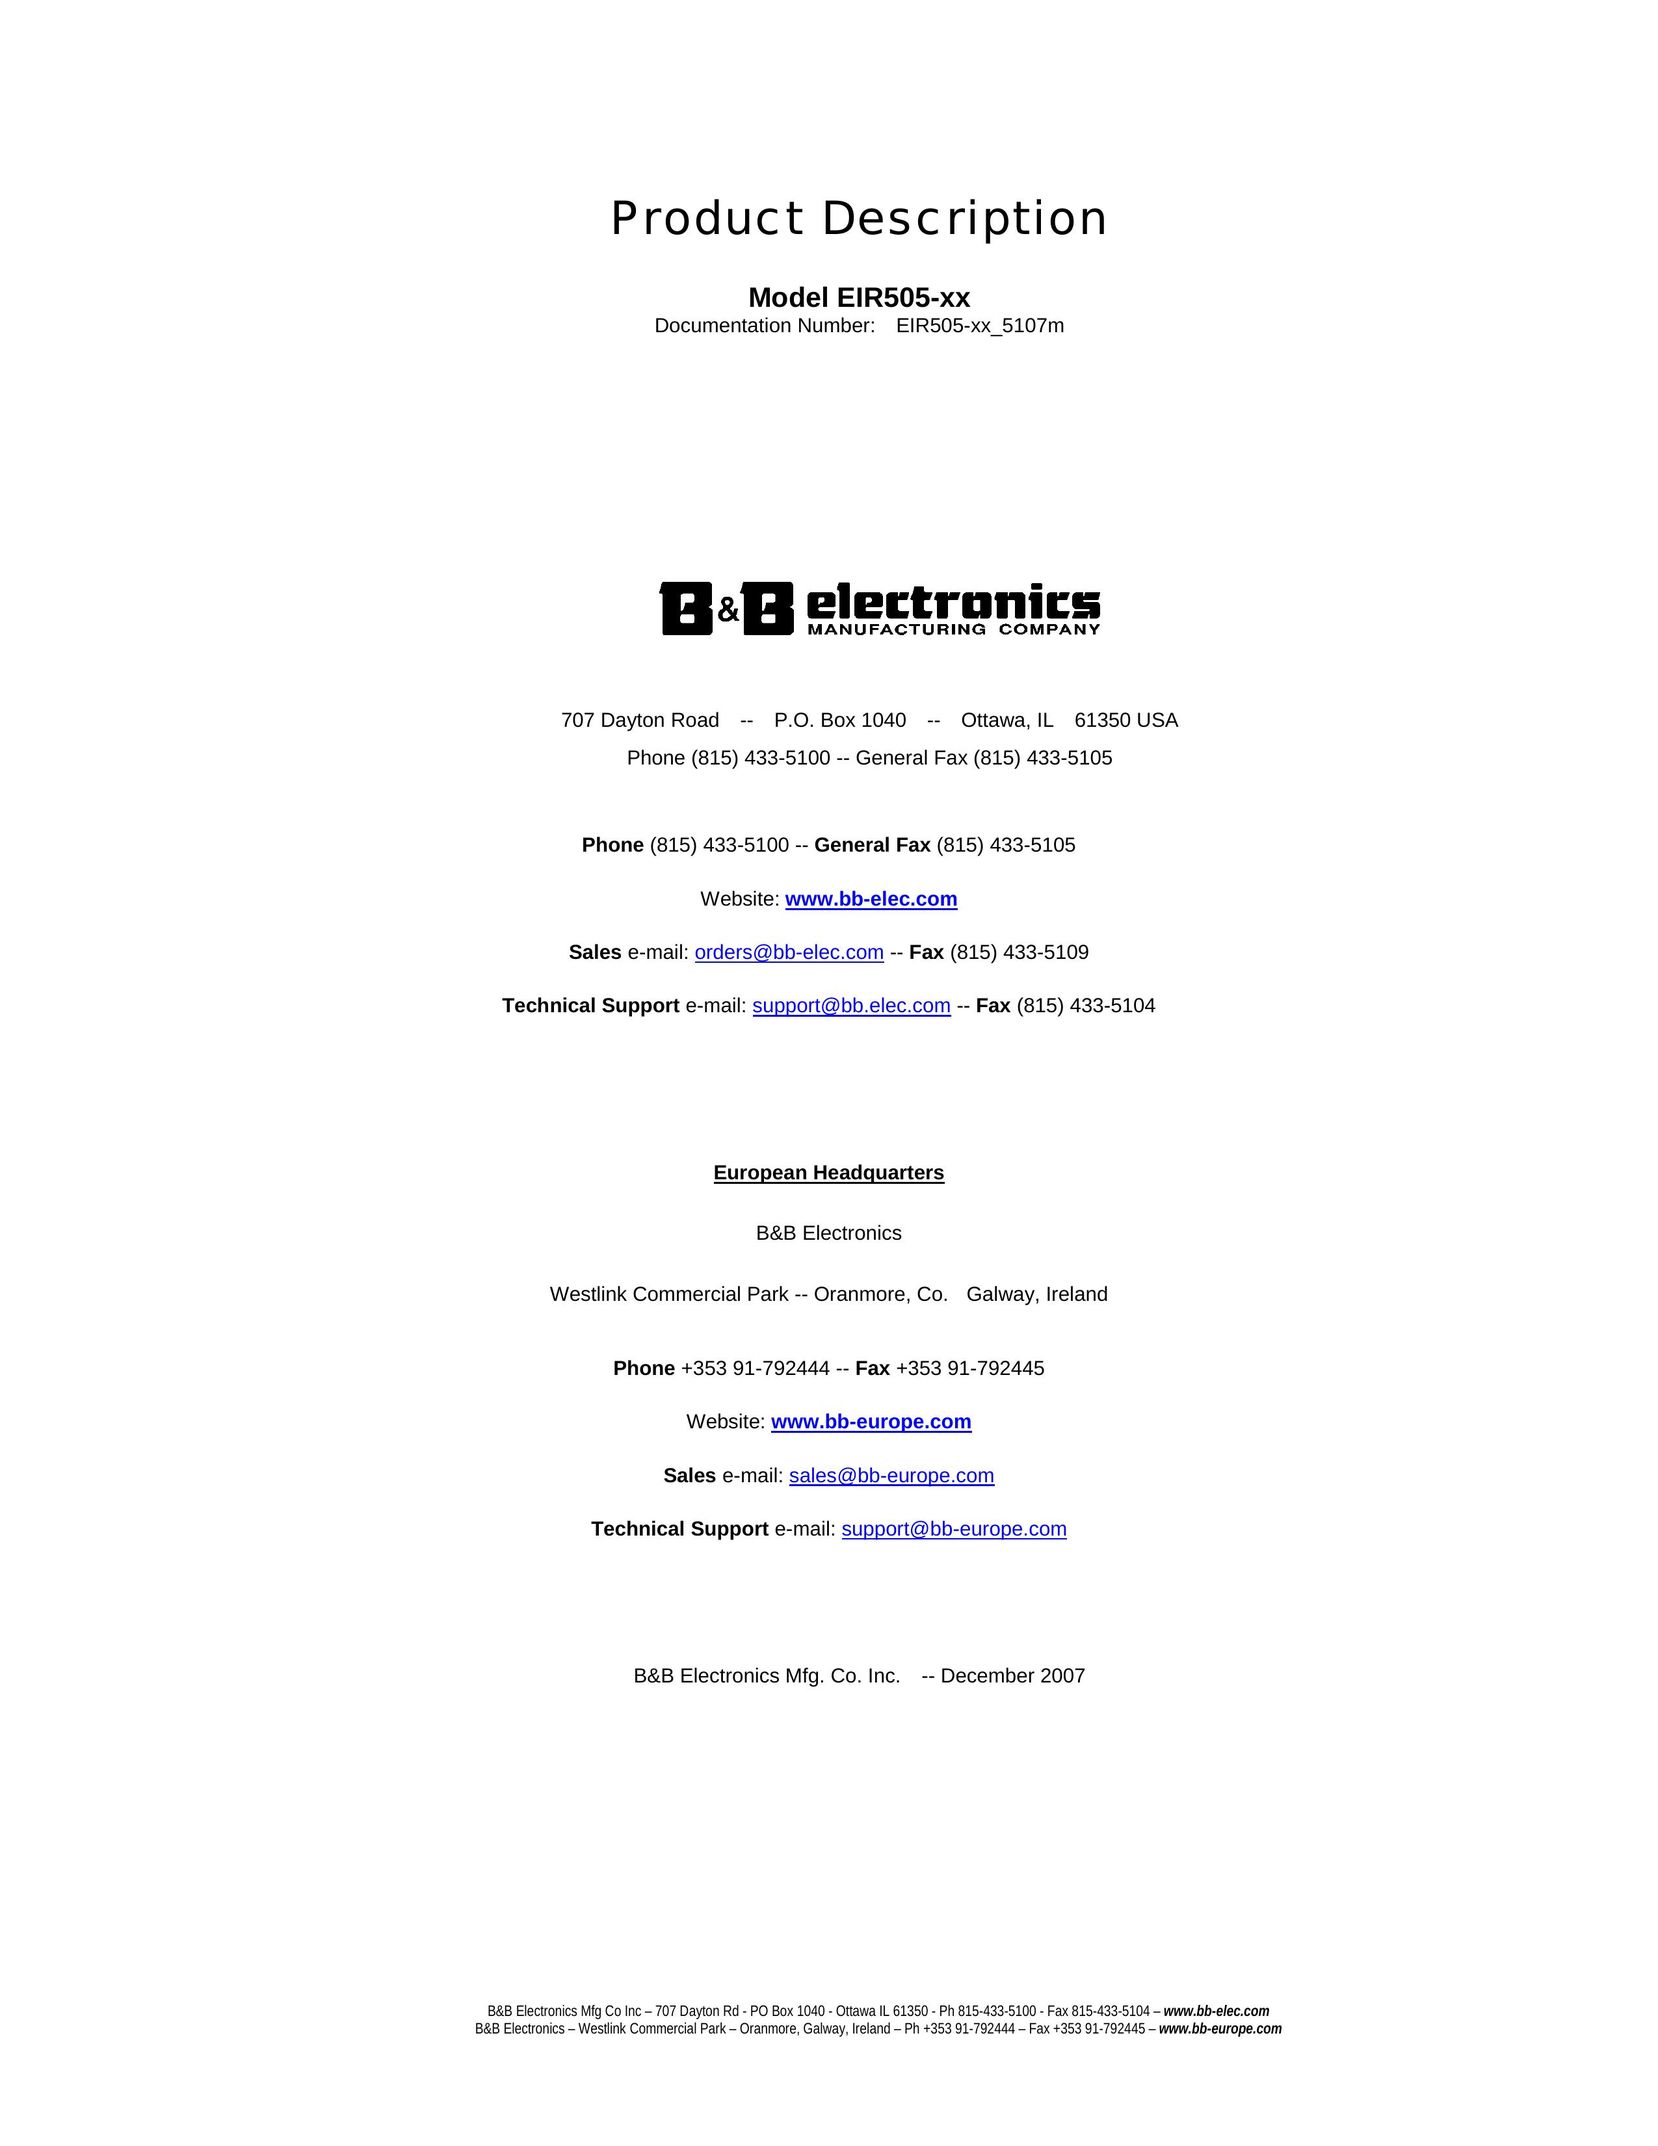 B&B Electronics EIR505-XX Switch User Manual